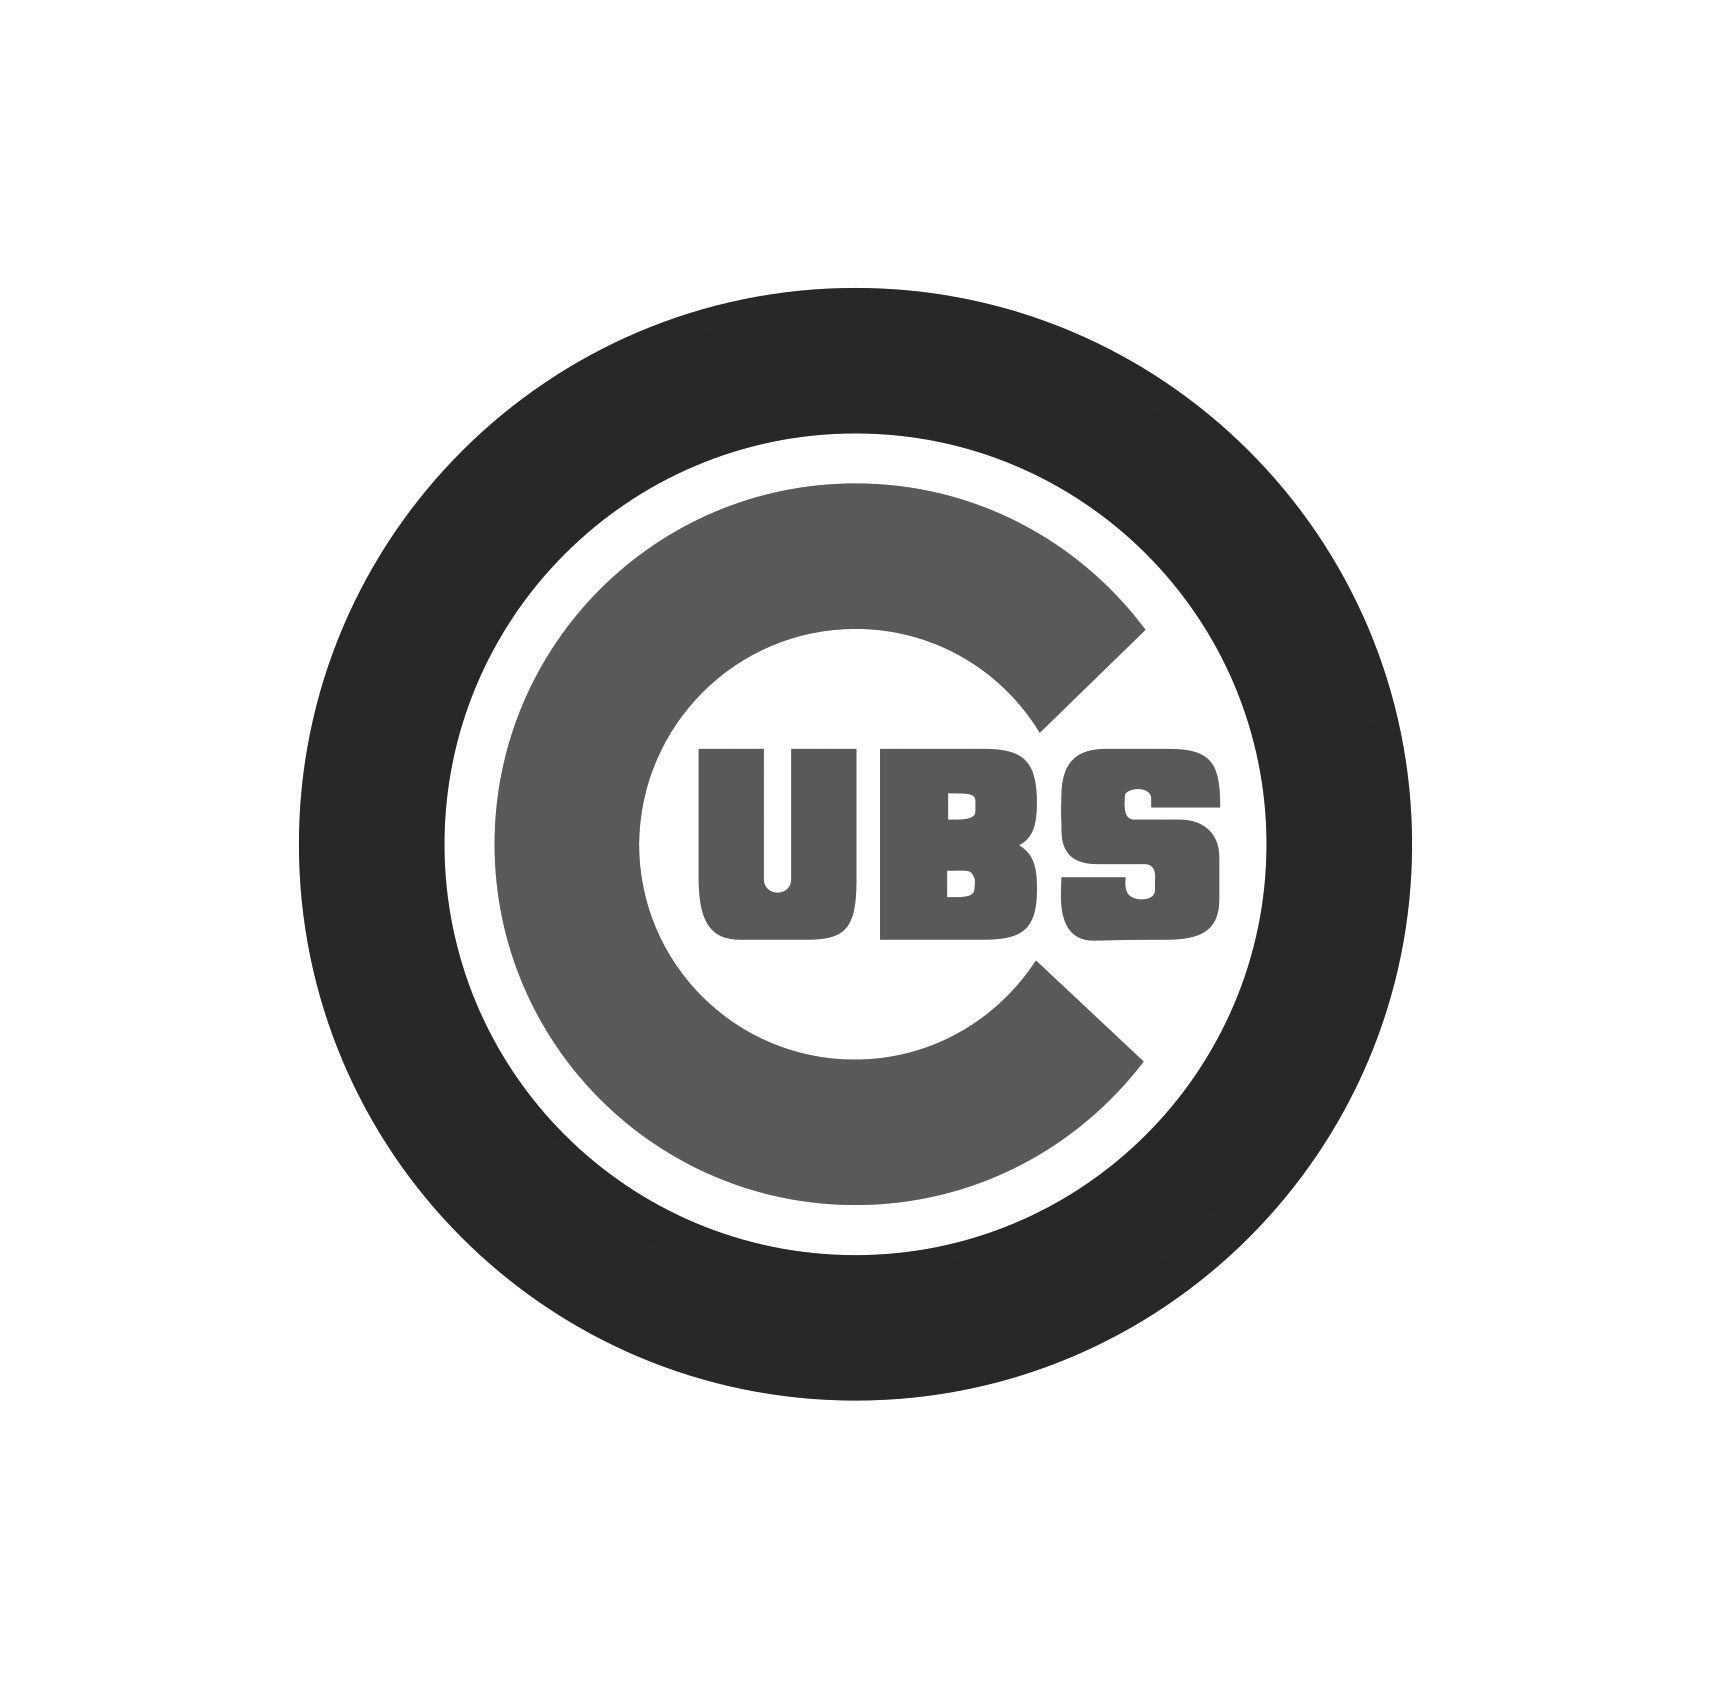 chicago cubs baseball team logo